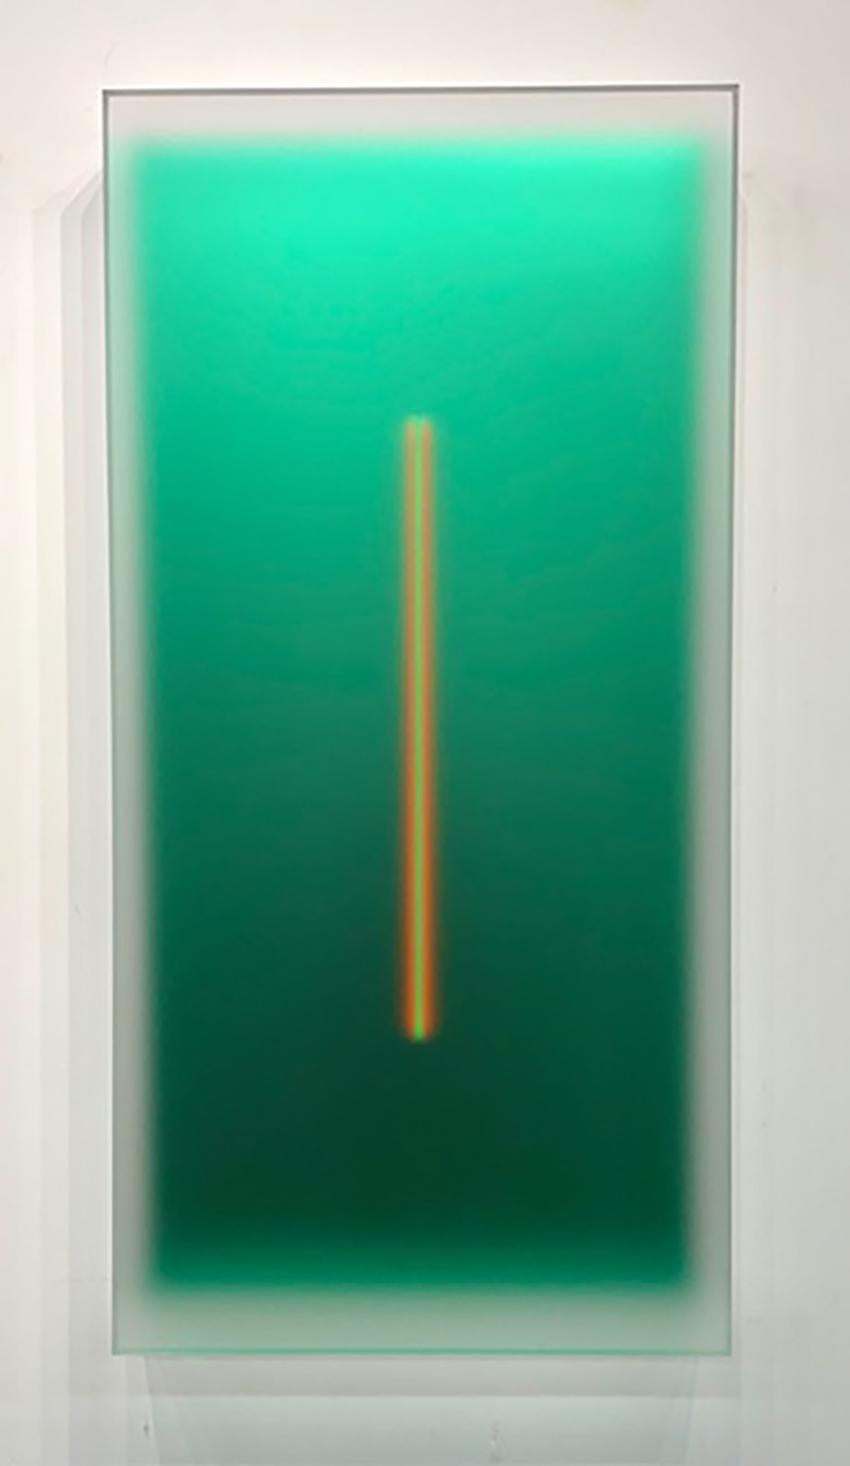 Light-Glyph 54 (Green) - Abstract Geometric Sculpture by Casper Brindle